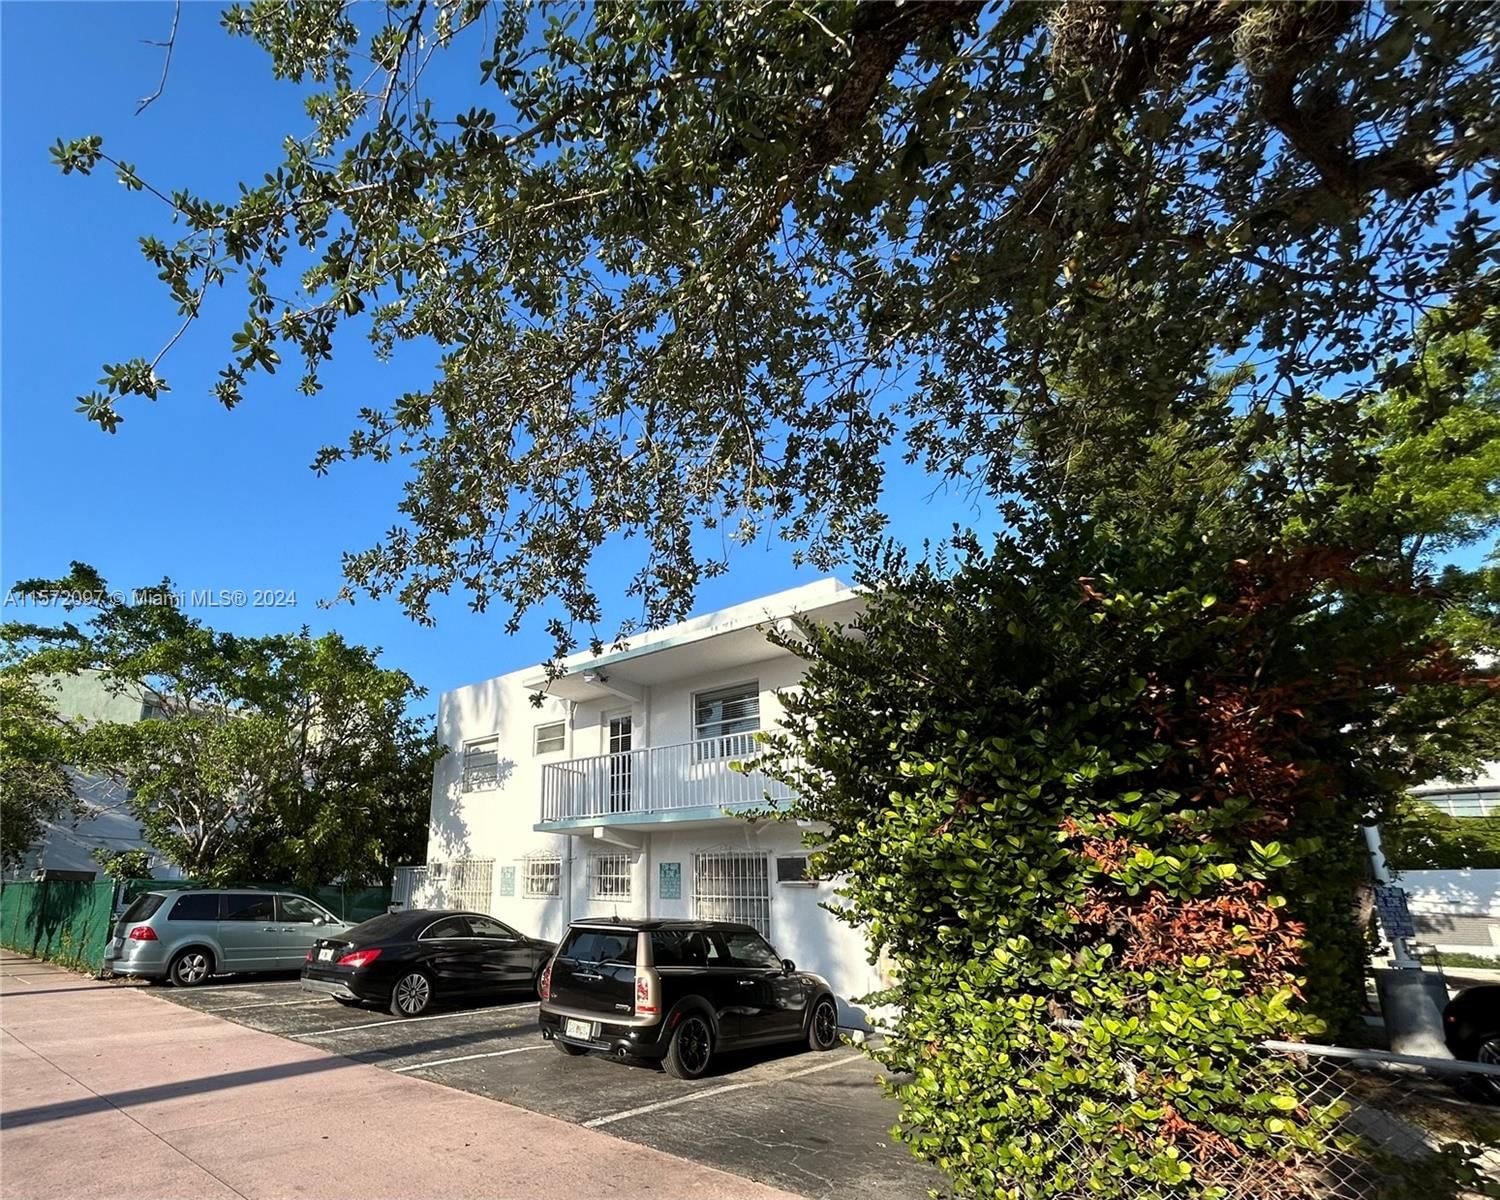 Real estate property located at 323 Washington Ave #3, Miami-Dade County, WASHINGTON AVE CONDO, Miami Beach, FL